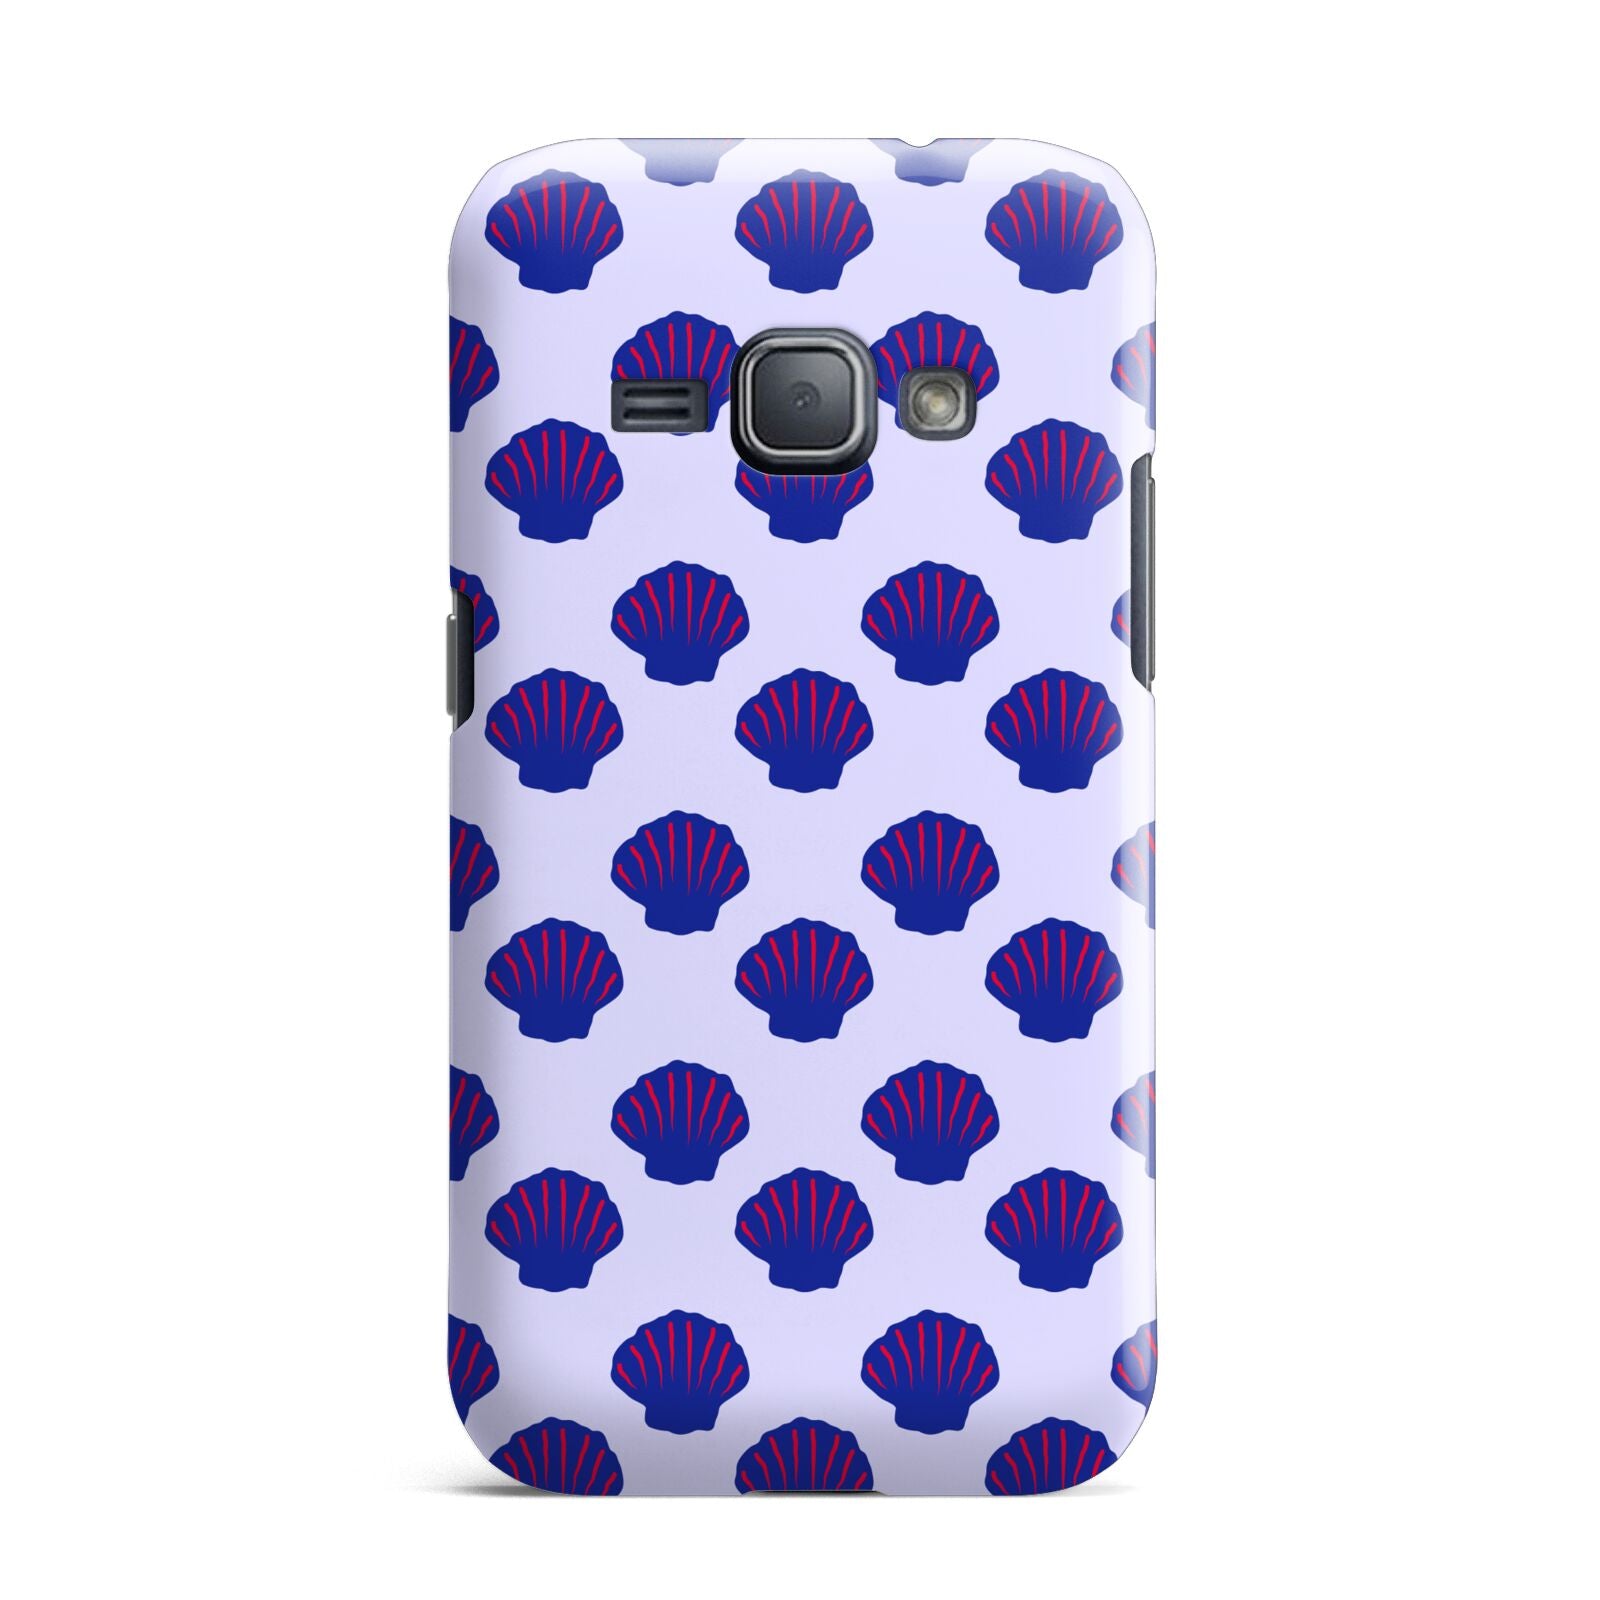 Shell Pattern Samsung Galaxy J1 2016 Case